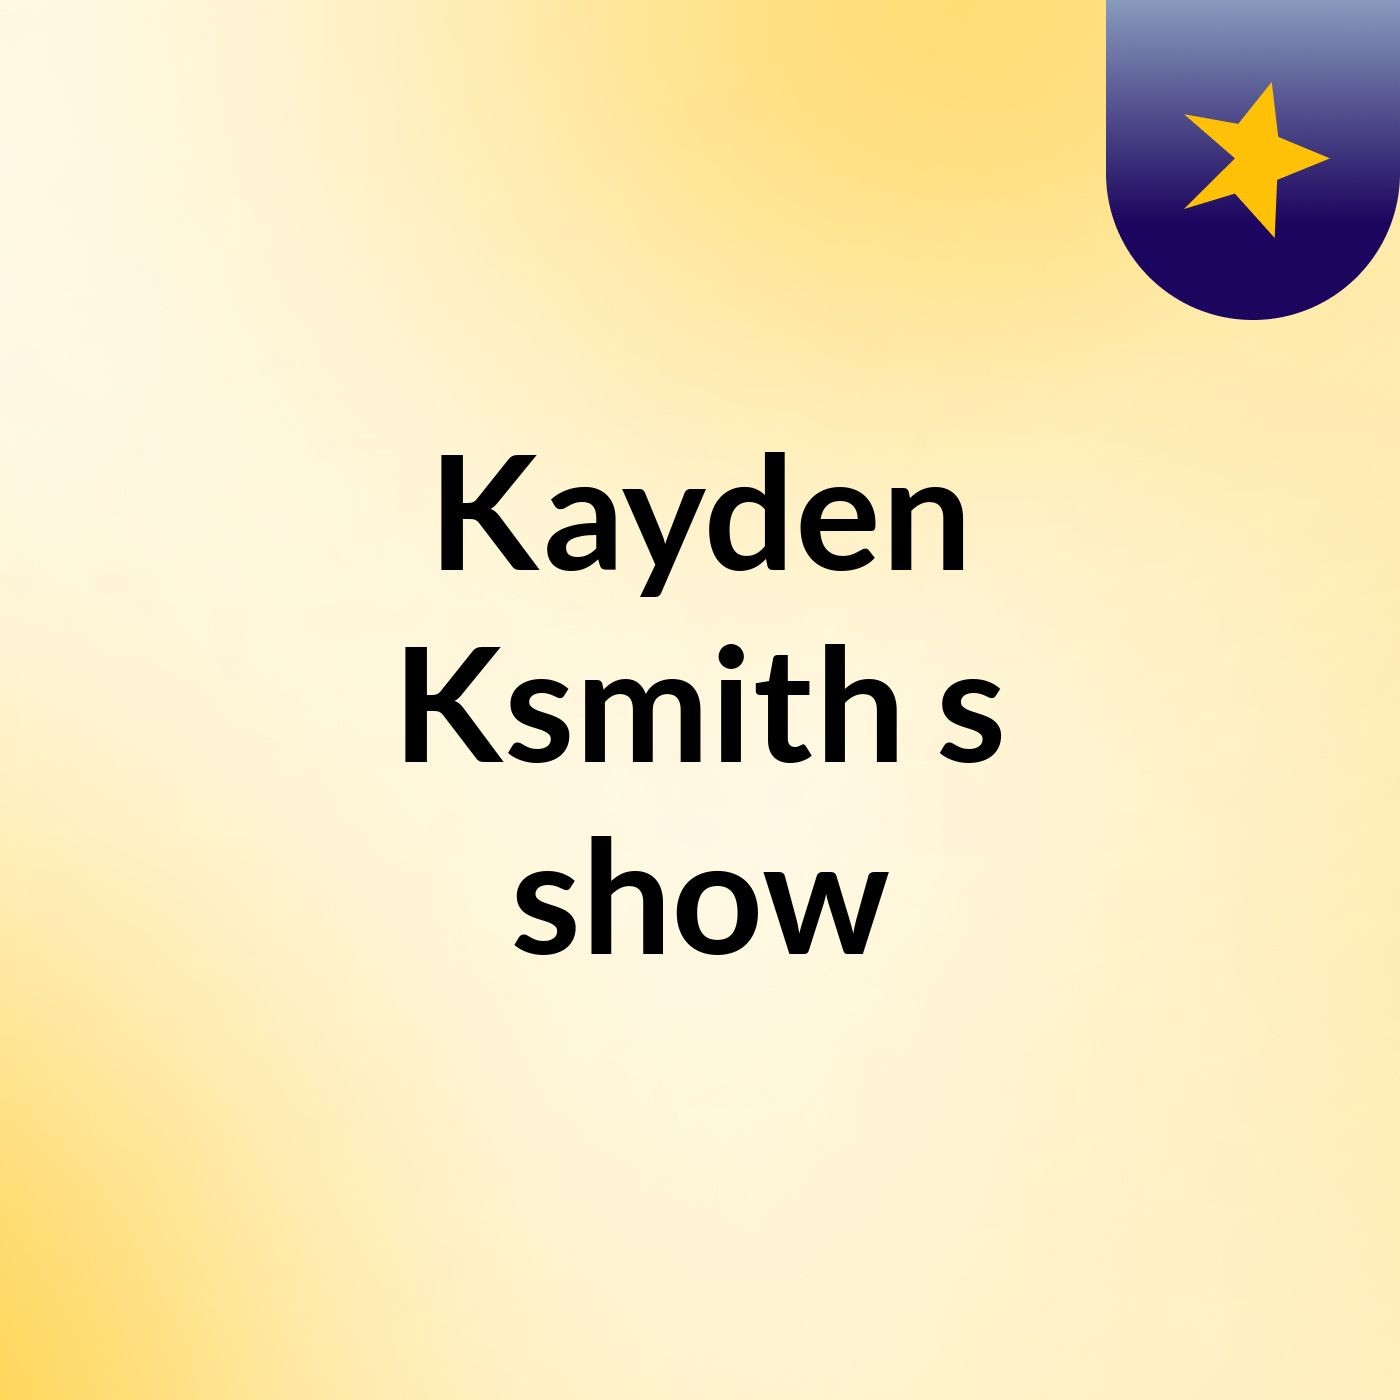 Kayden Ksmith's show